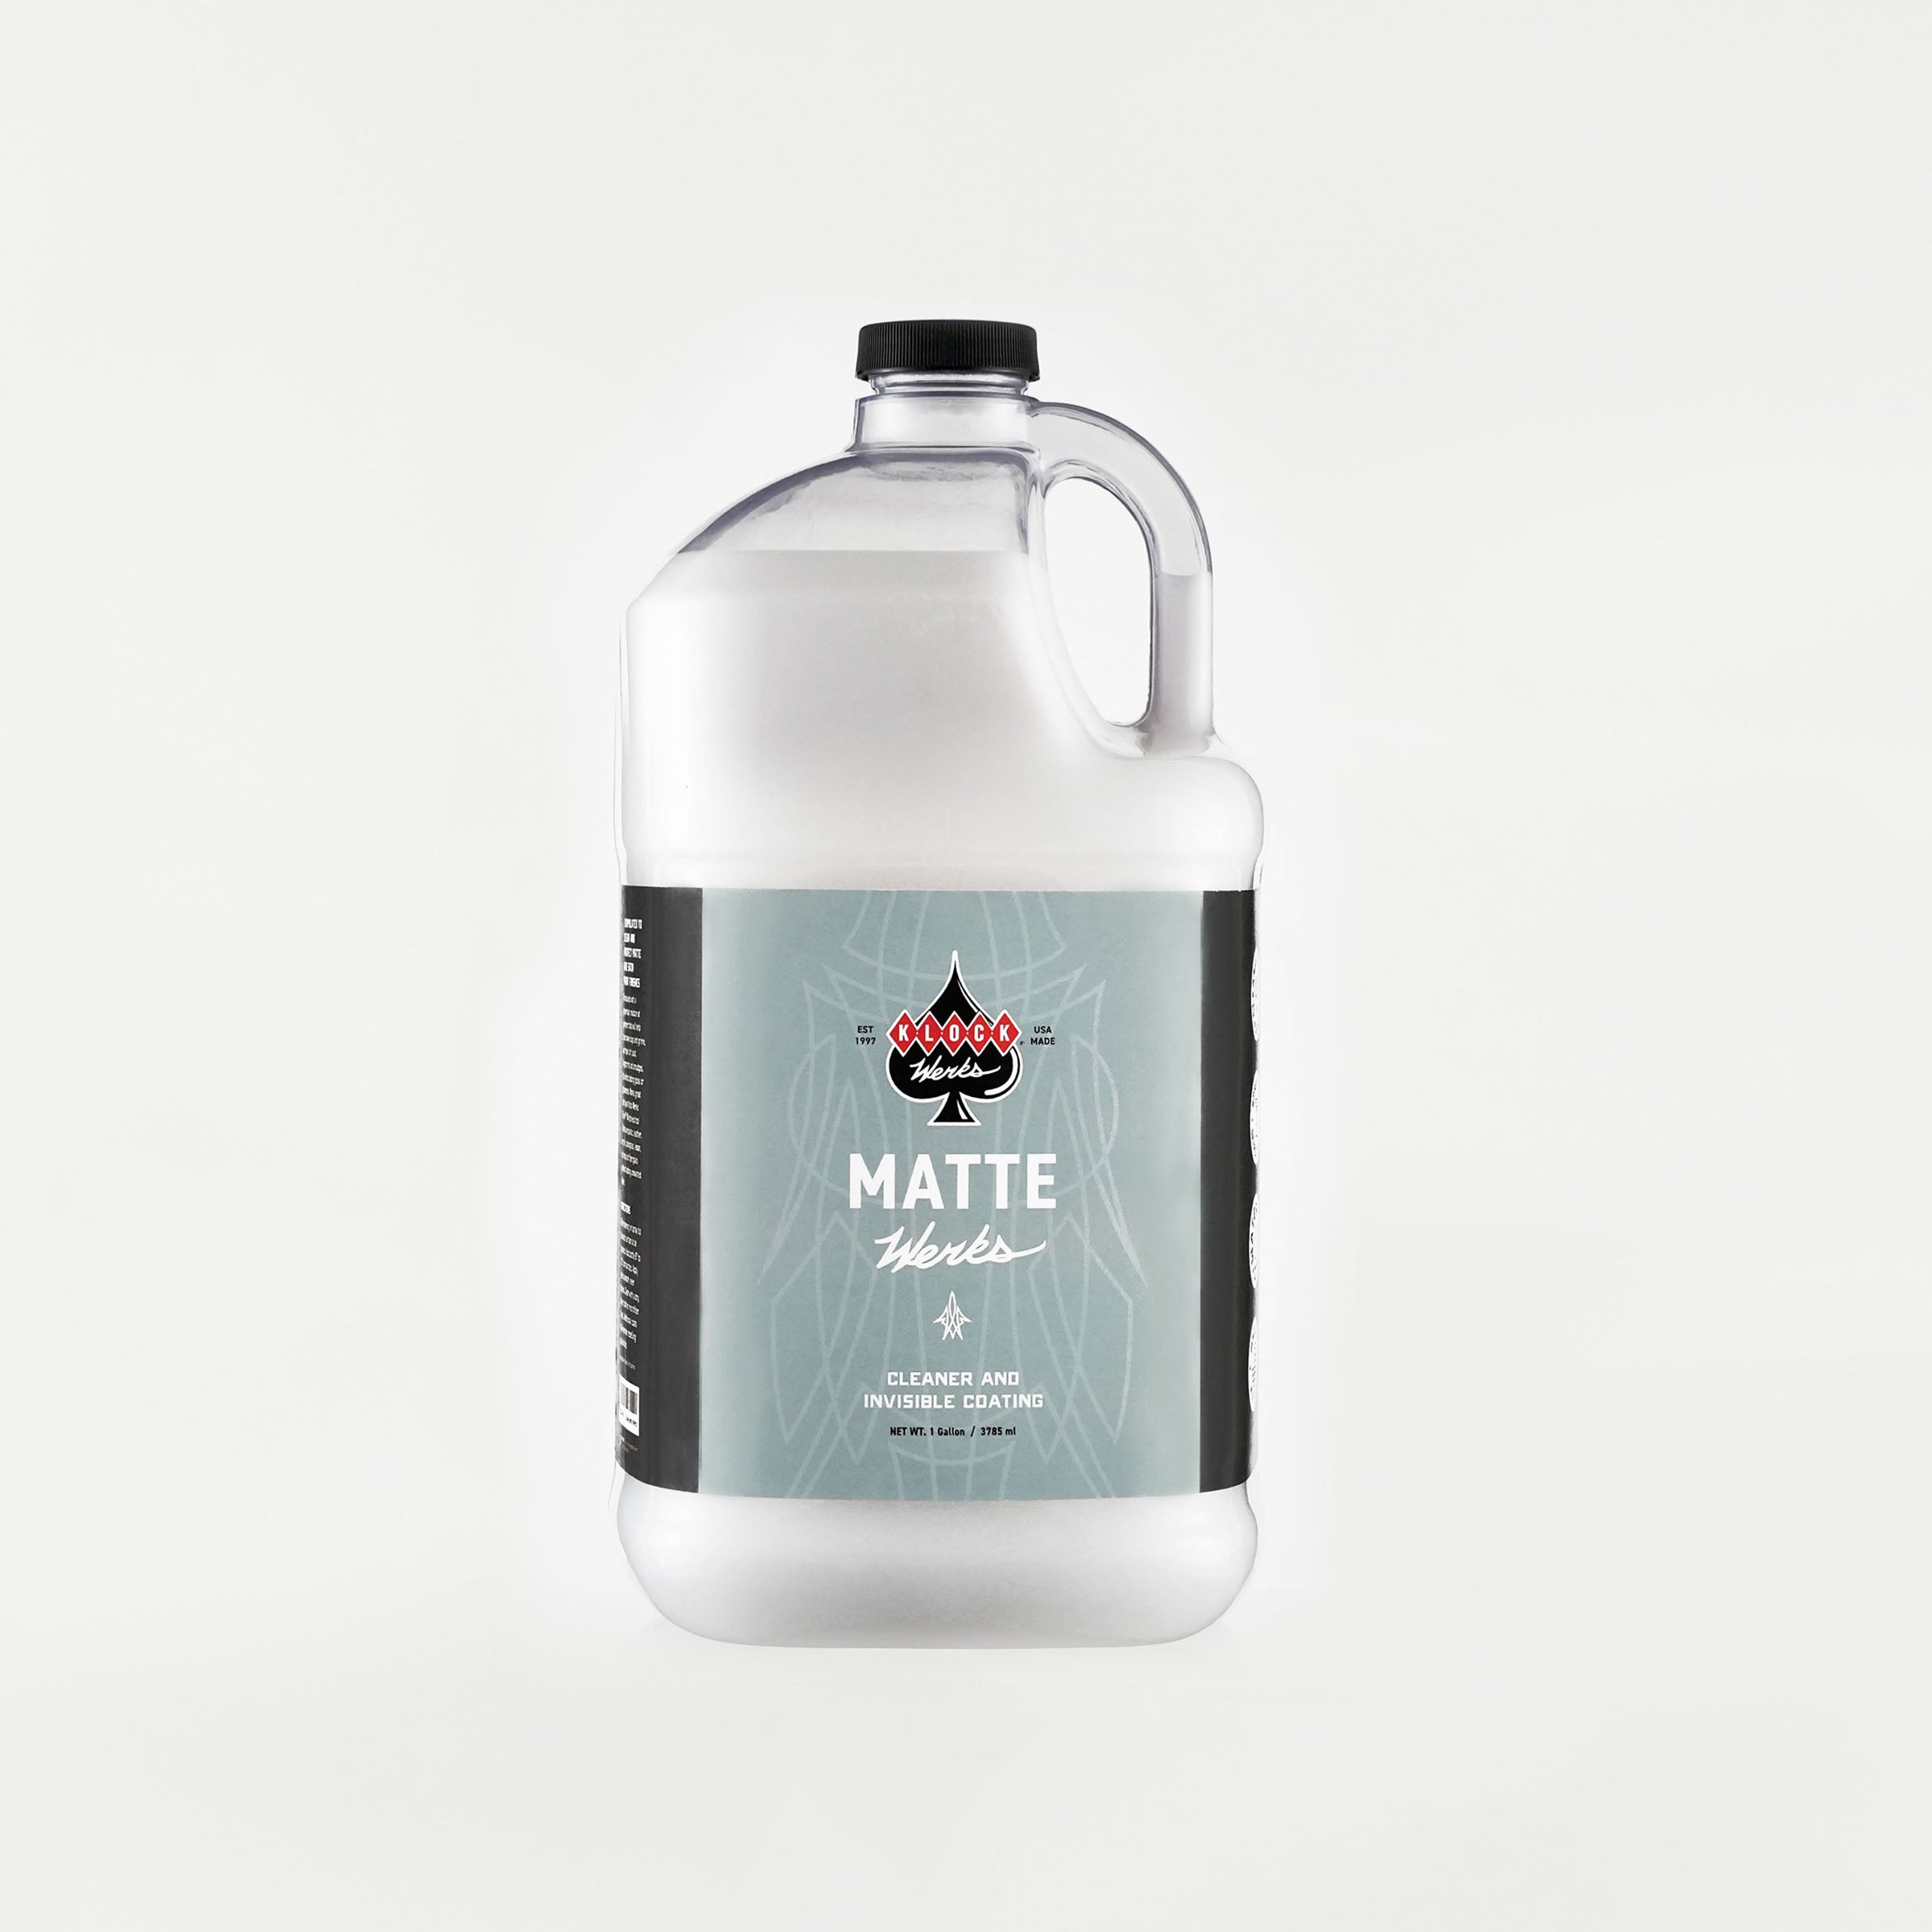 Gallon Matte Werks cleaning product bottle(Gallon Matte Werks)